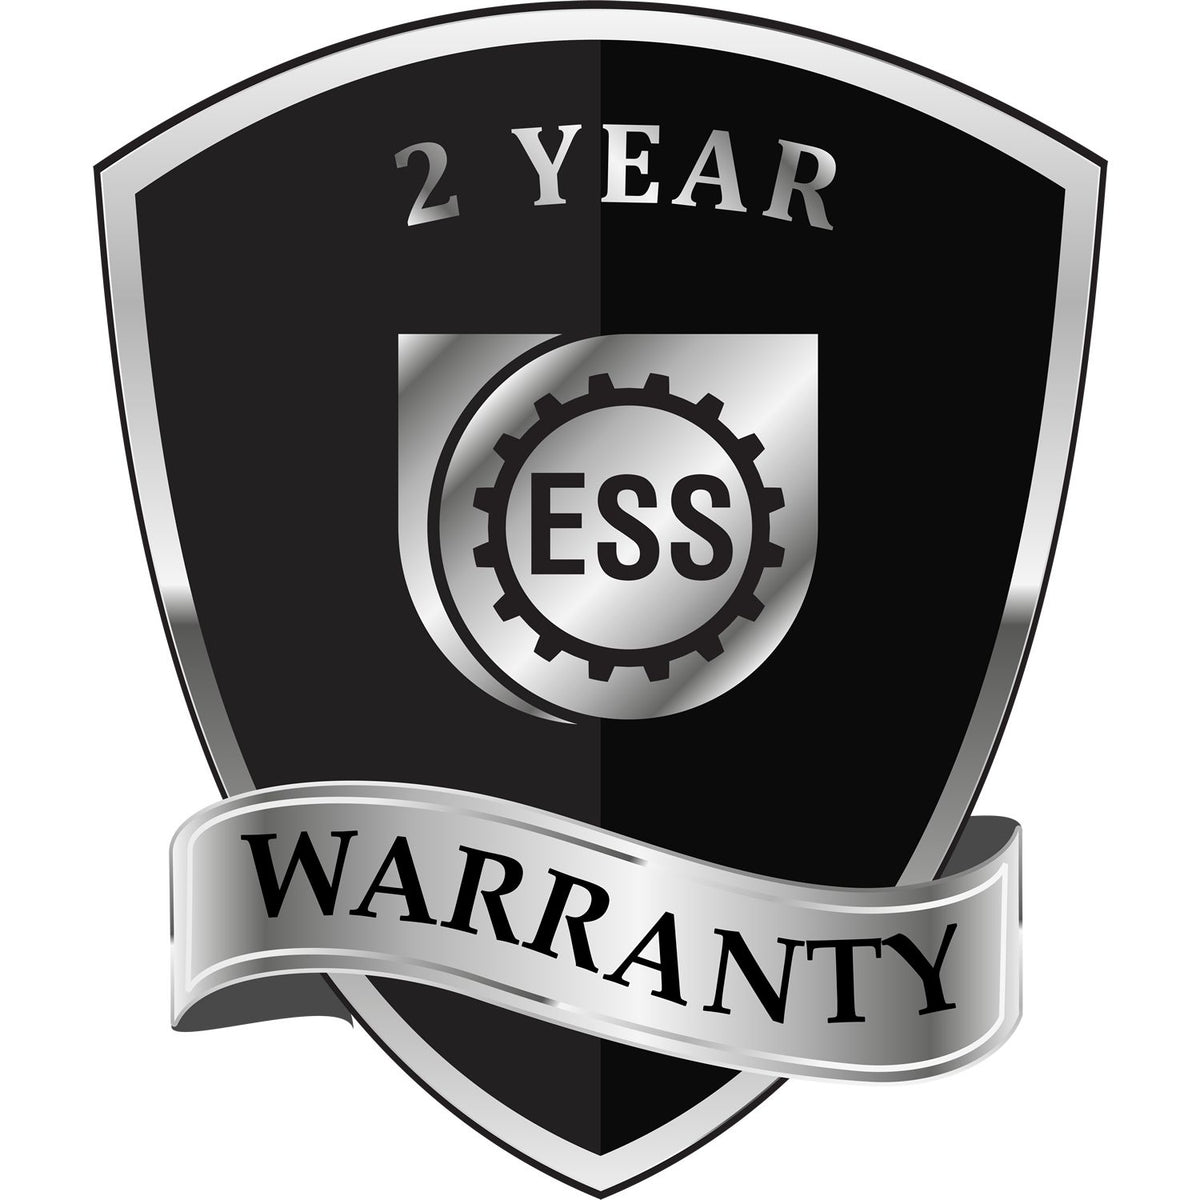 A black and silver badge or emblem showing warranty information for the Gift North Dakota Land Surveyor Seal